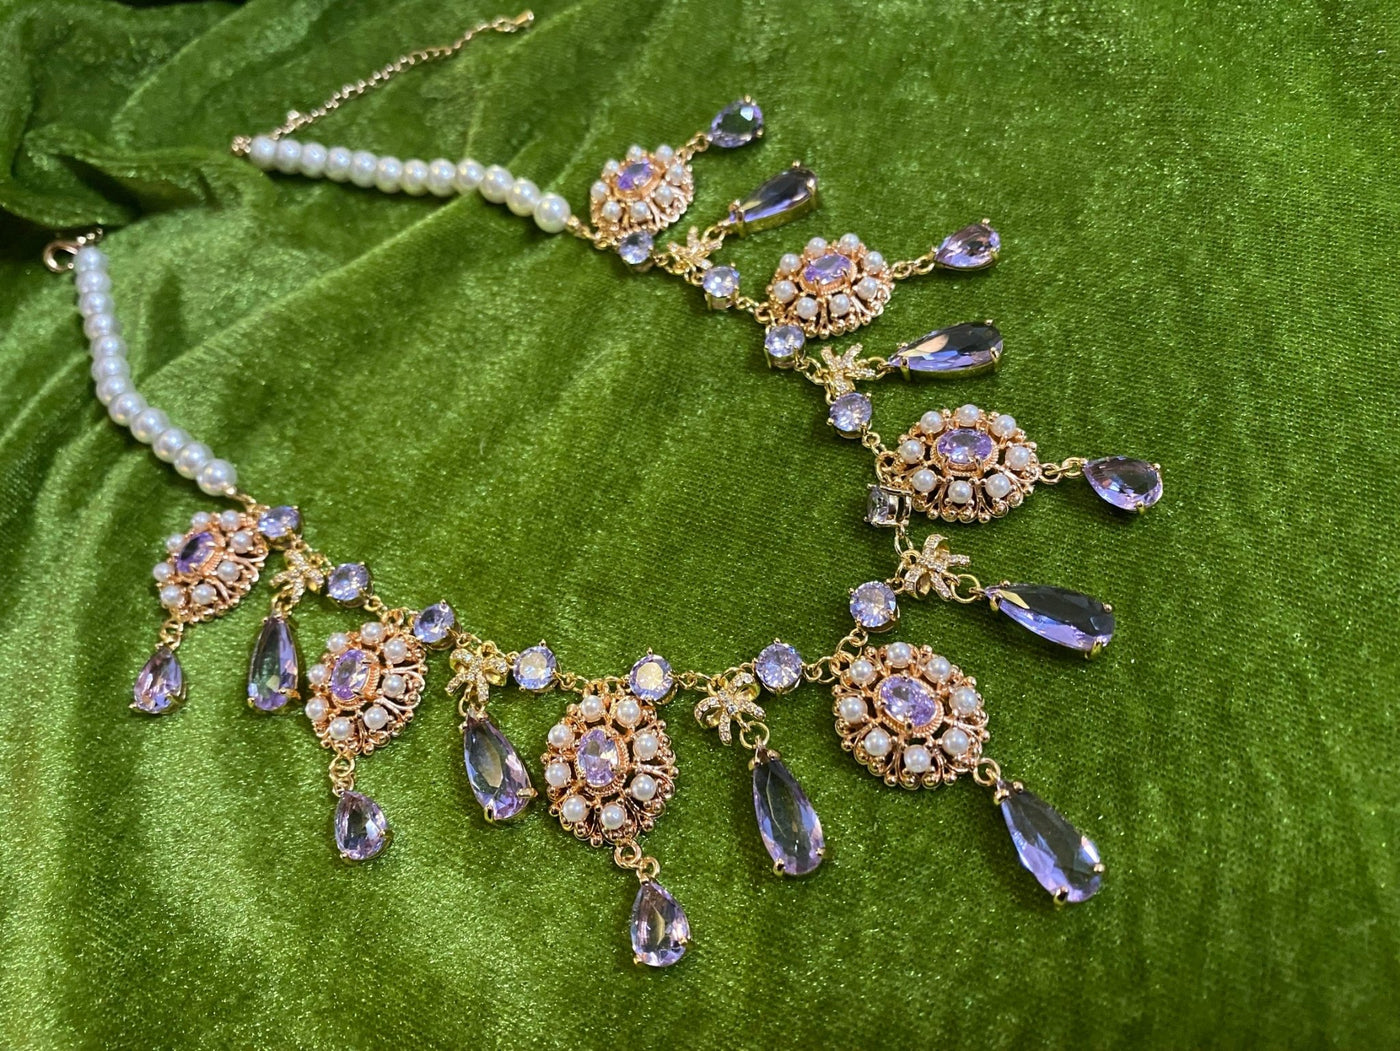 Vintage Baroque Purple Gemstones Earrings - Precious Stone Pearl Crystals for Women Regency Era Style - French Jewelry - WonderlandByLilian